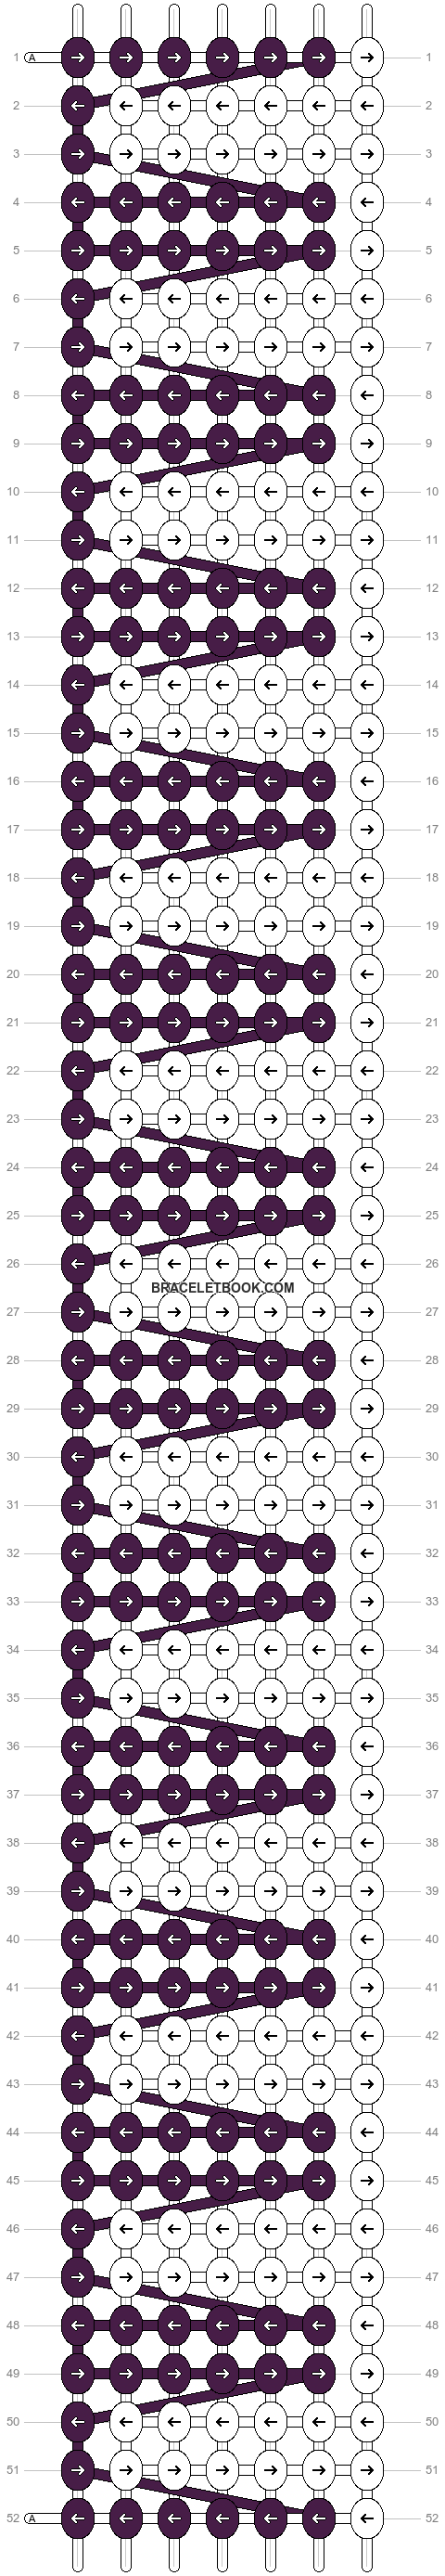 Alpha pattern #15234 variation #6928 pattern